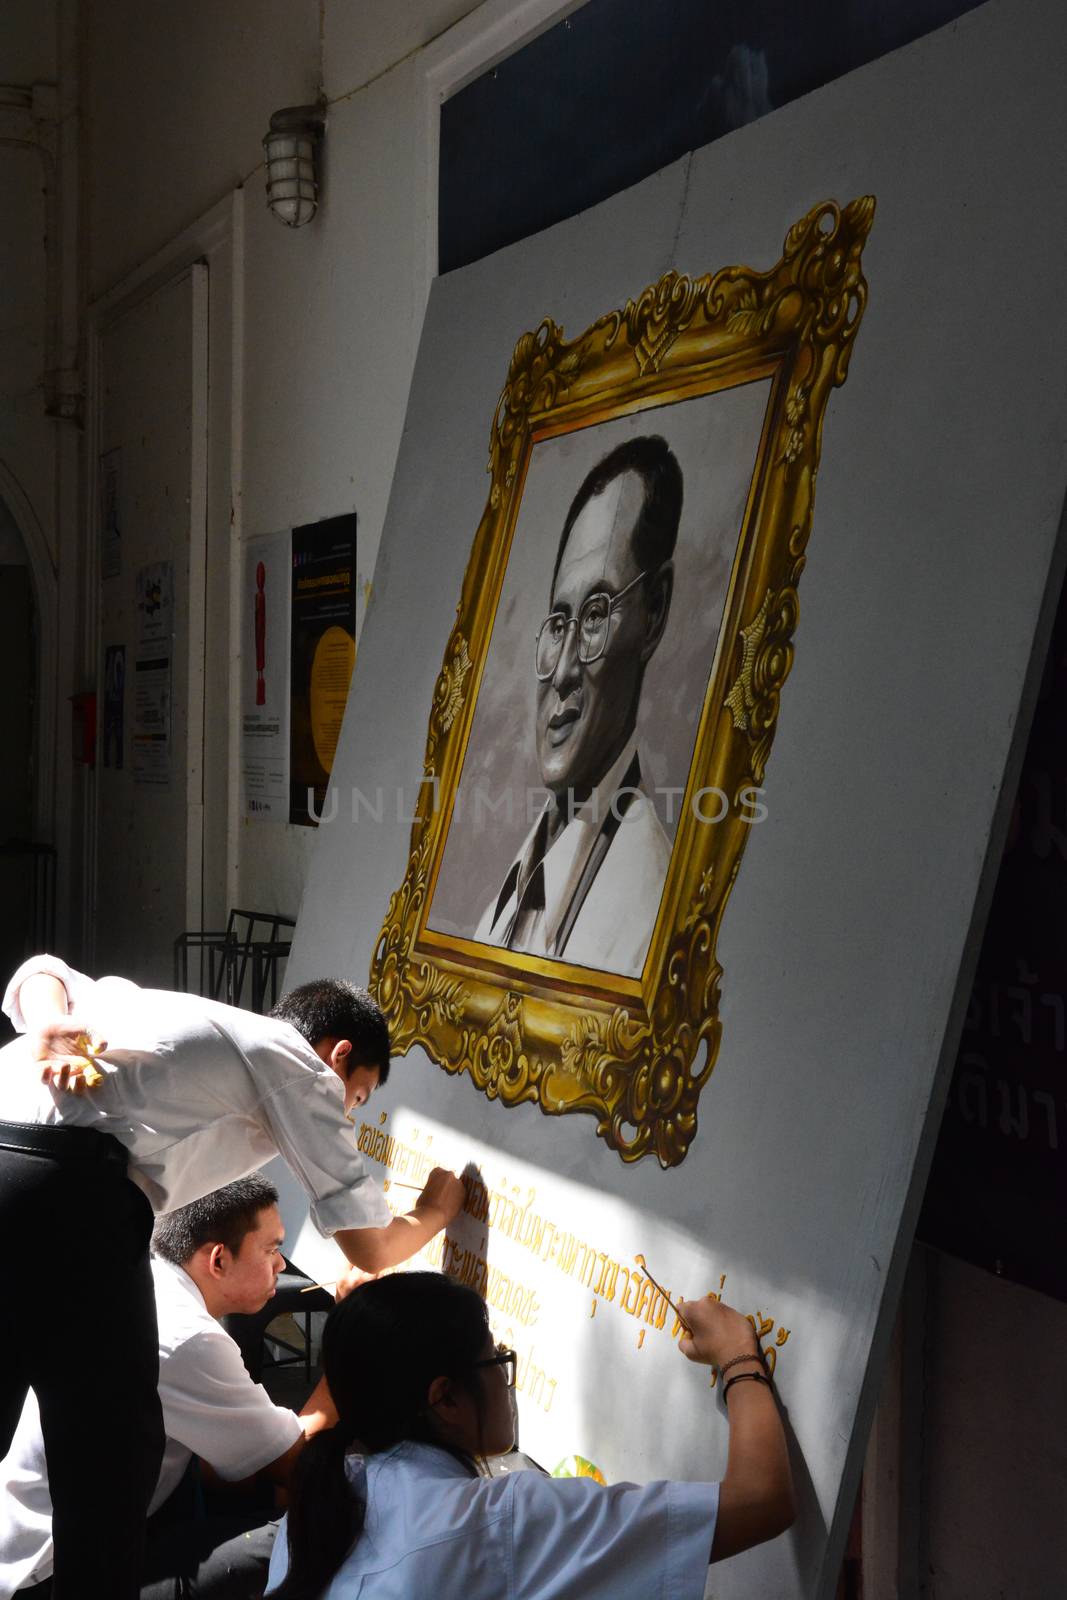 Bangkok, Thailand- OCT 22, 2016: Students  painting  the portrait of King Bhumibol Adulyadej at Silpakorn University on OCT 22, 2016 Bangkok Thailand.